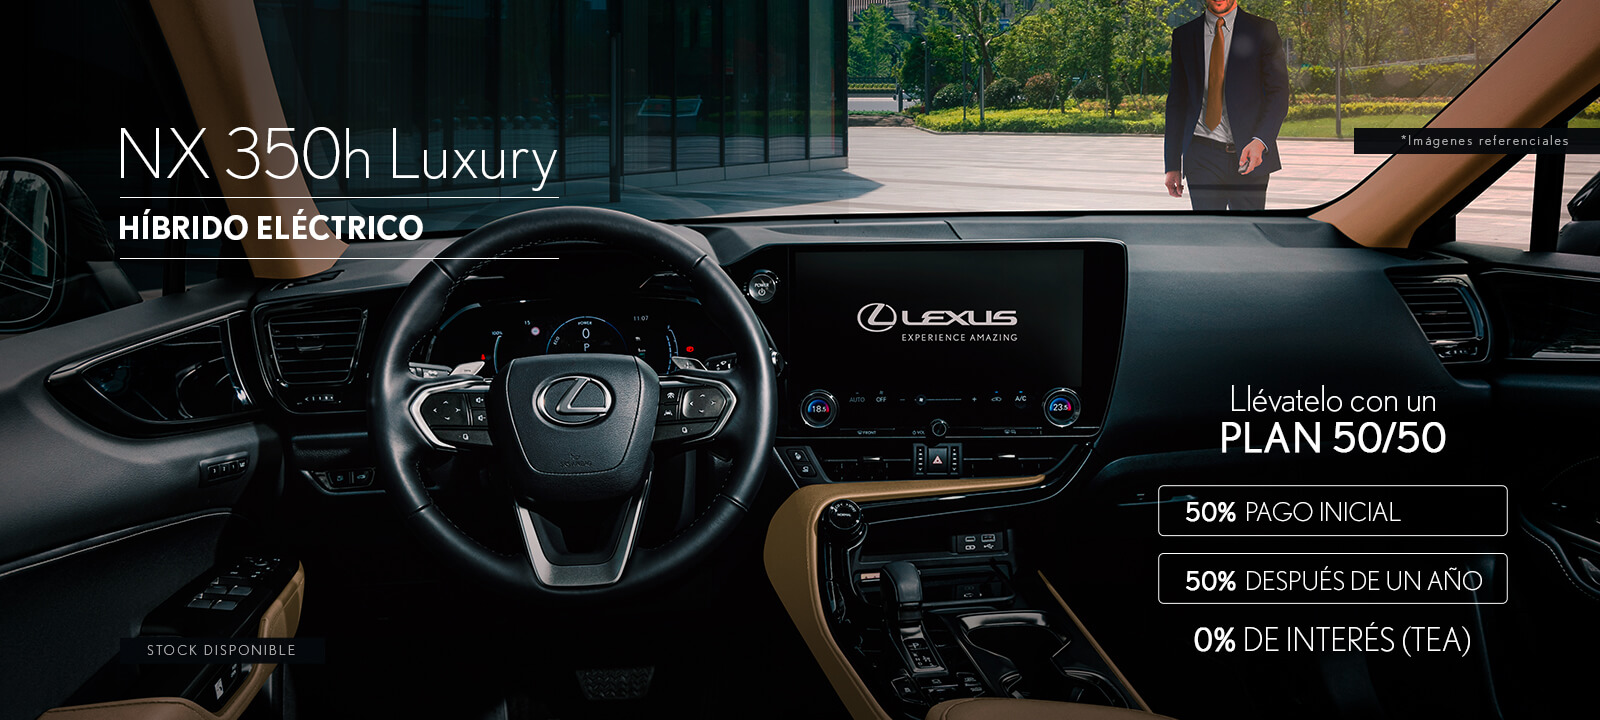 Lexus NX 350h Luxury hibrido electrico